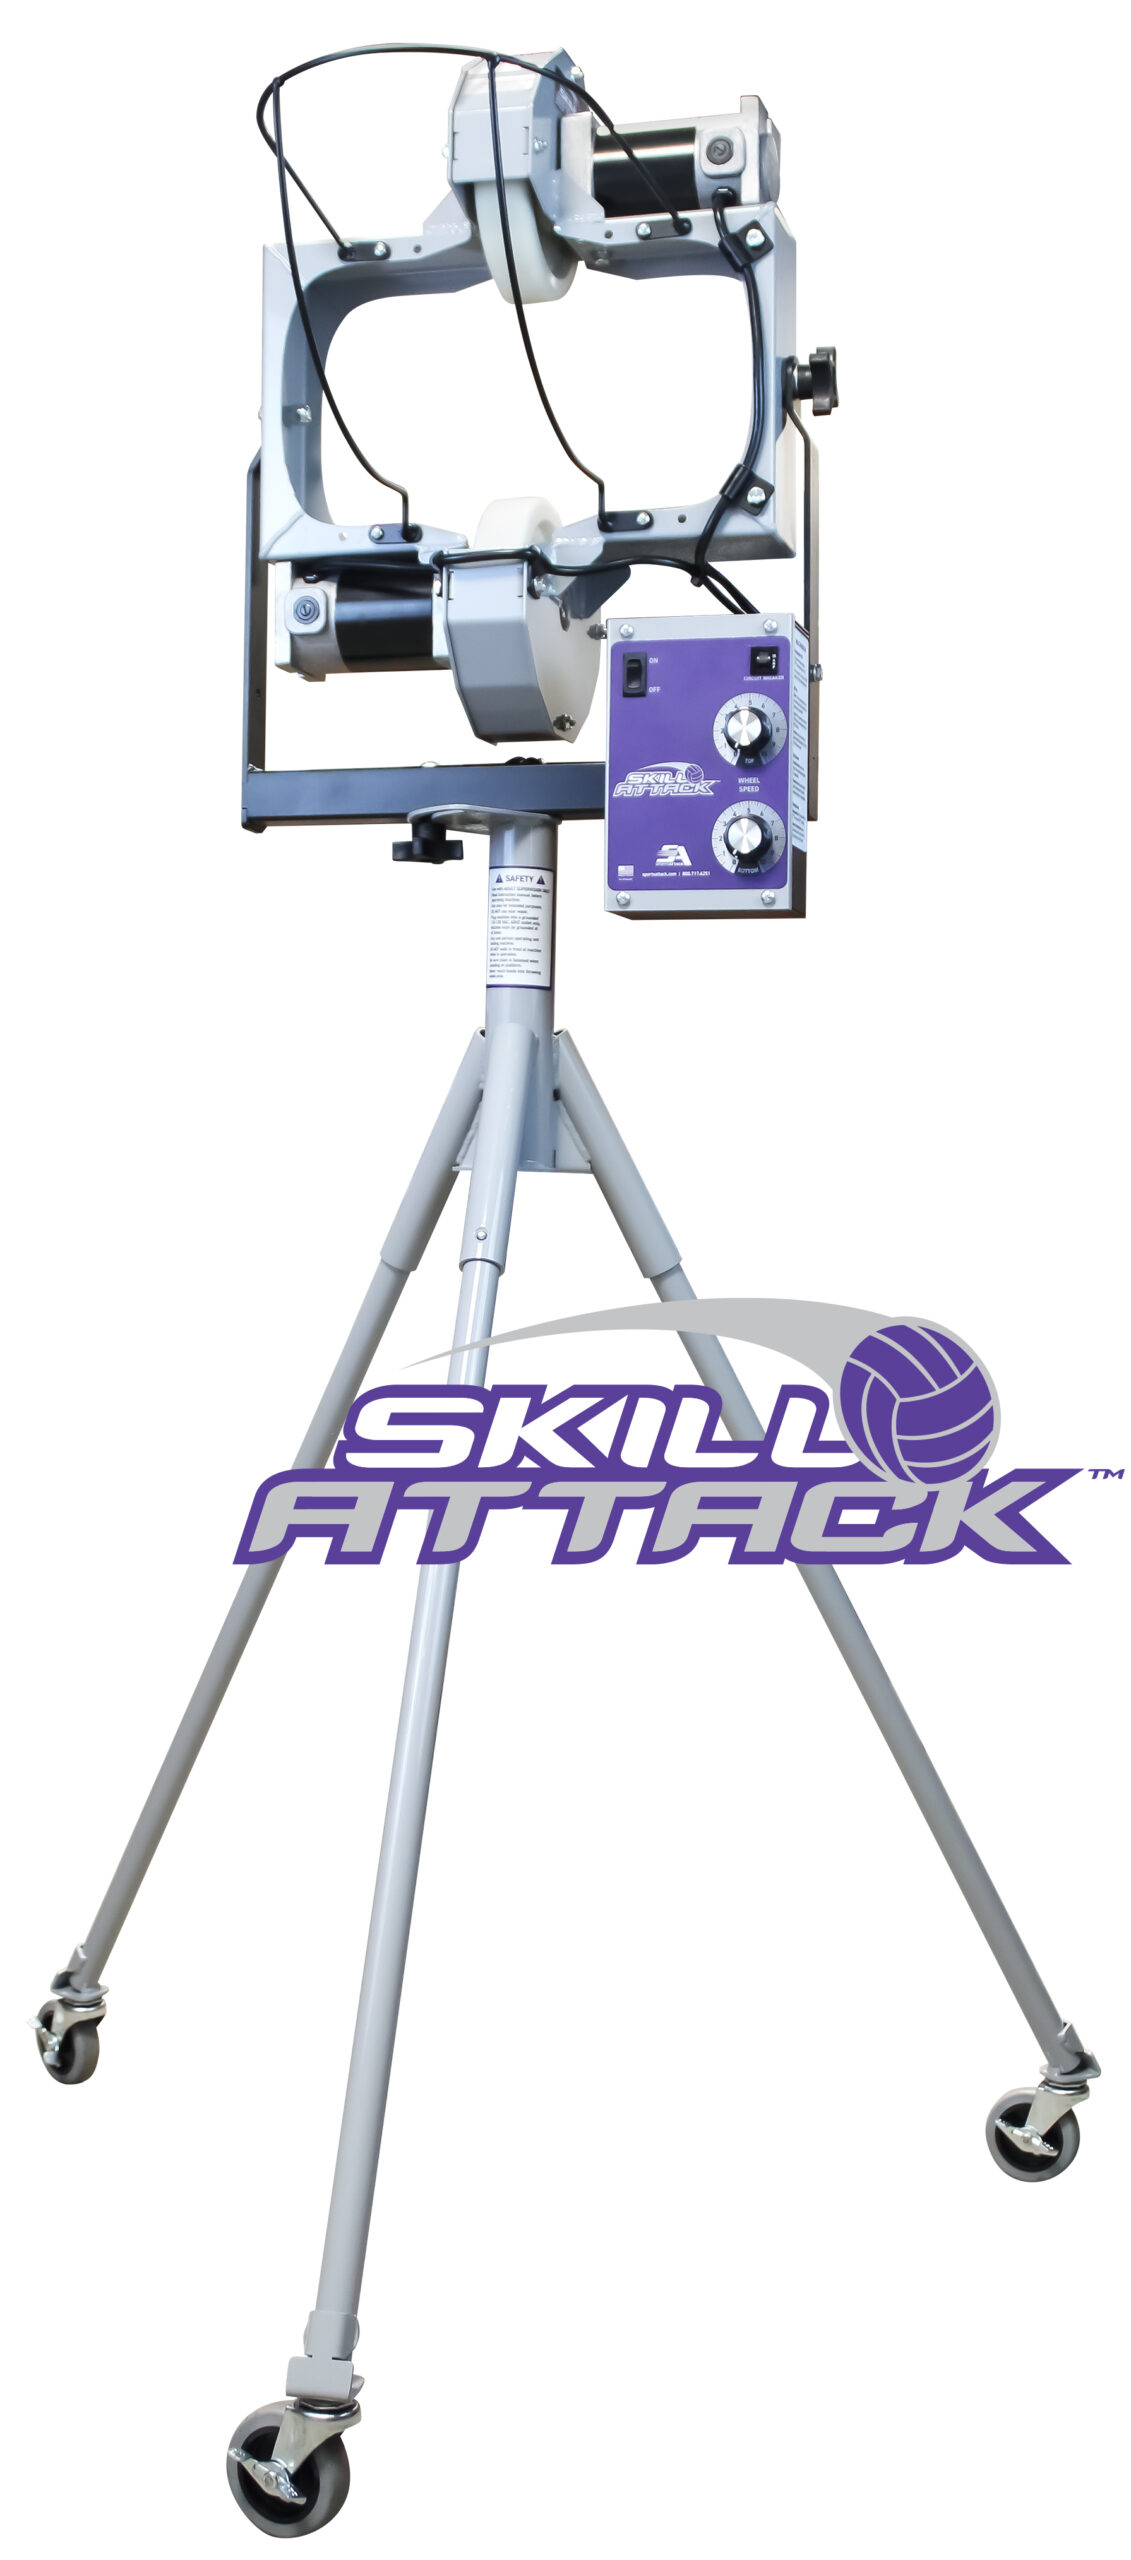 Skill Attack Volleyball Machine